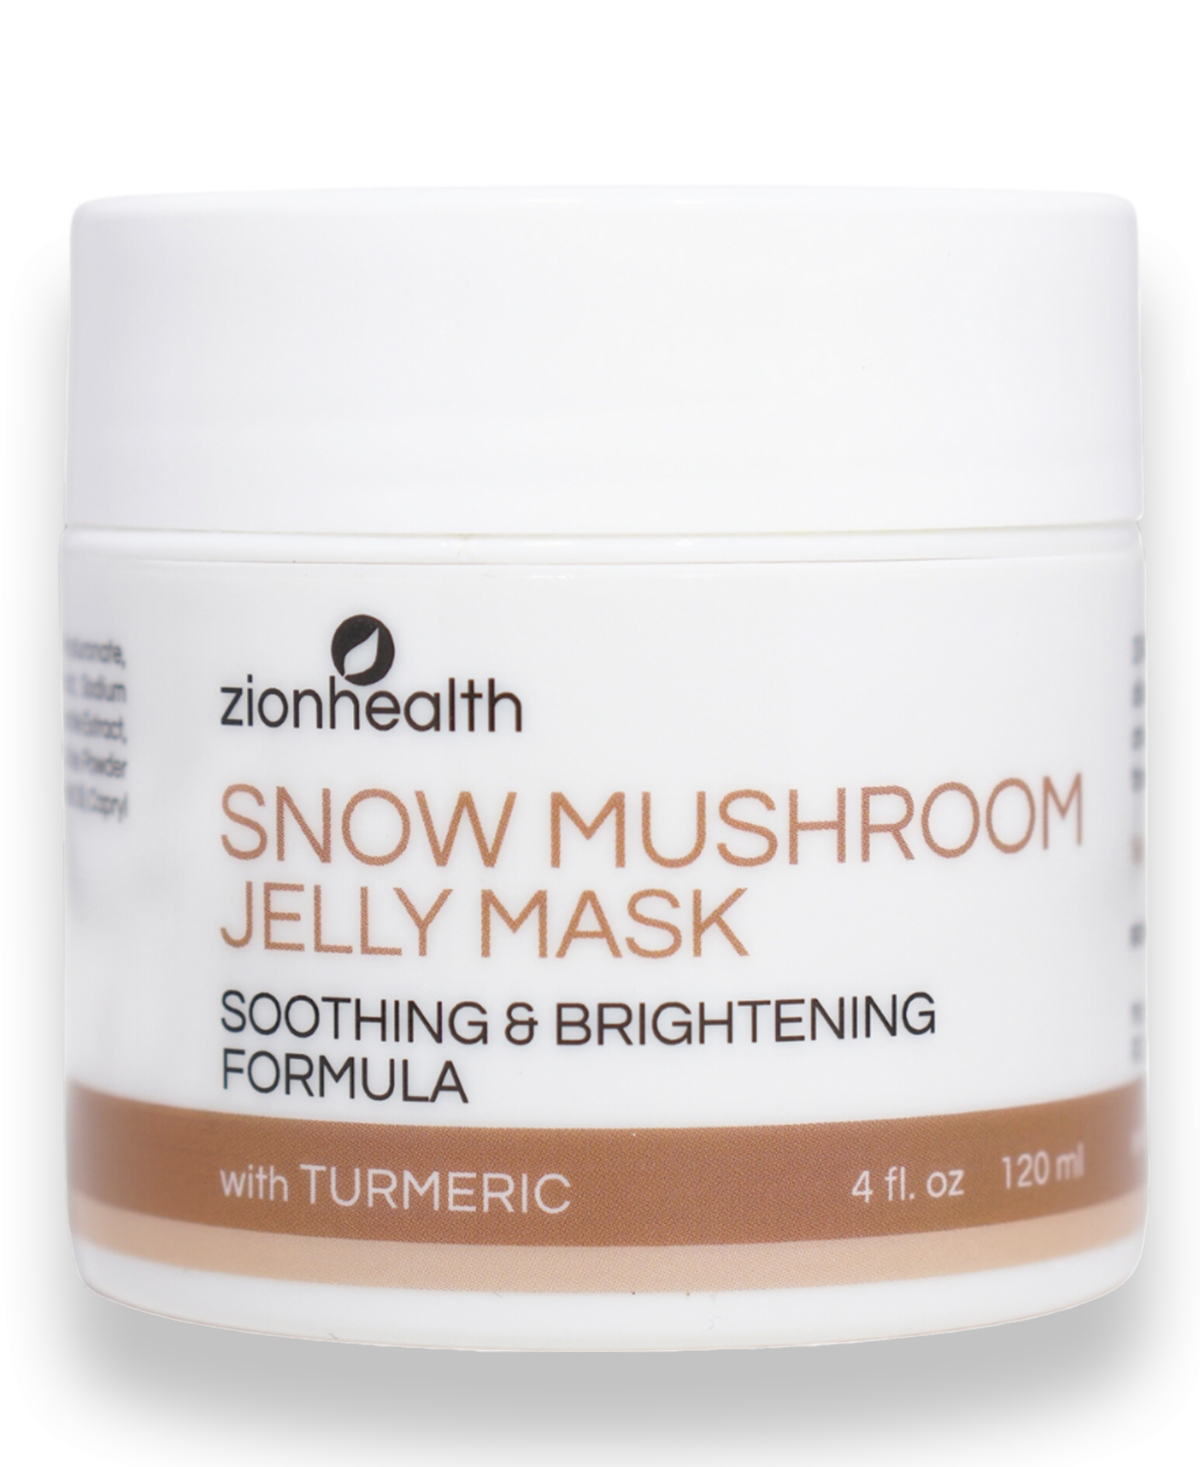 Snow Mushroom Jelly Mask with Turmeric, 120ml - White, Brown